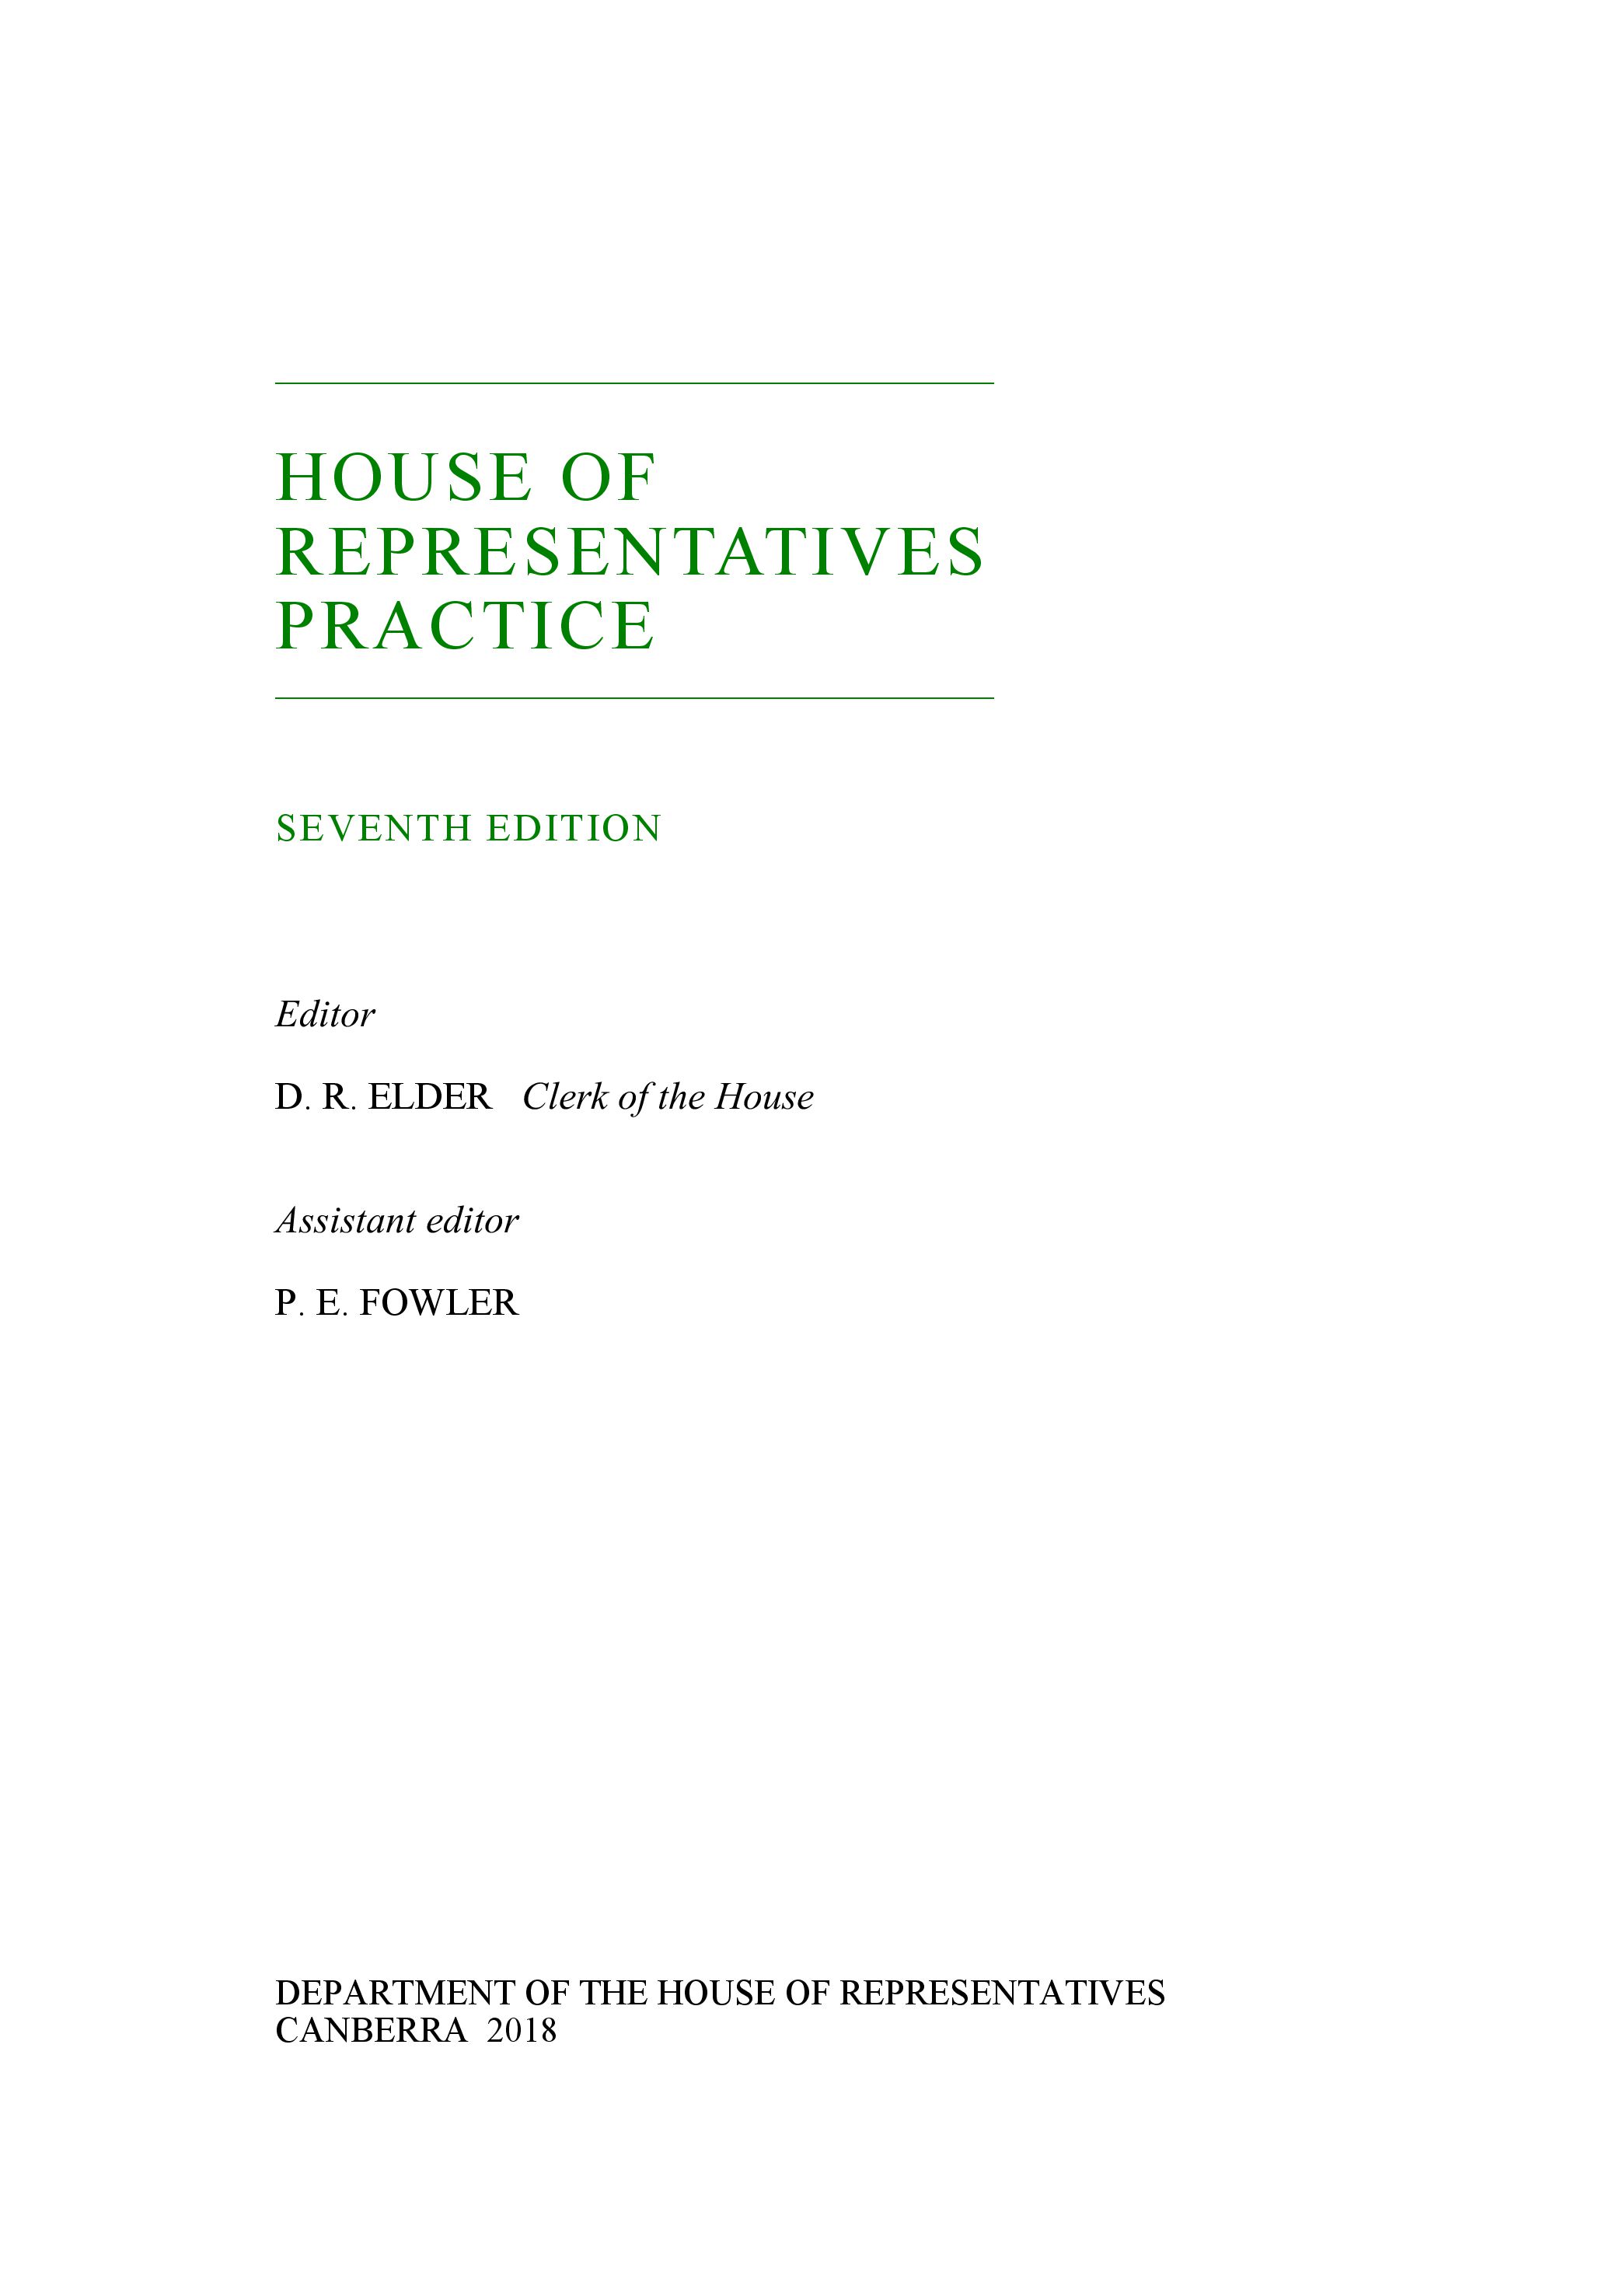 Australian House of Representatives Practice